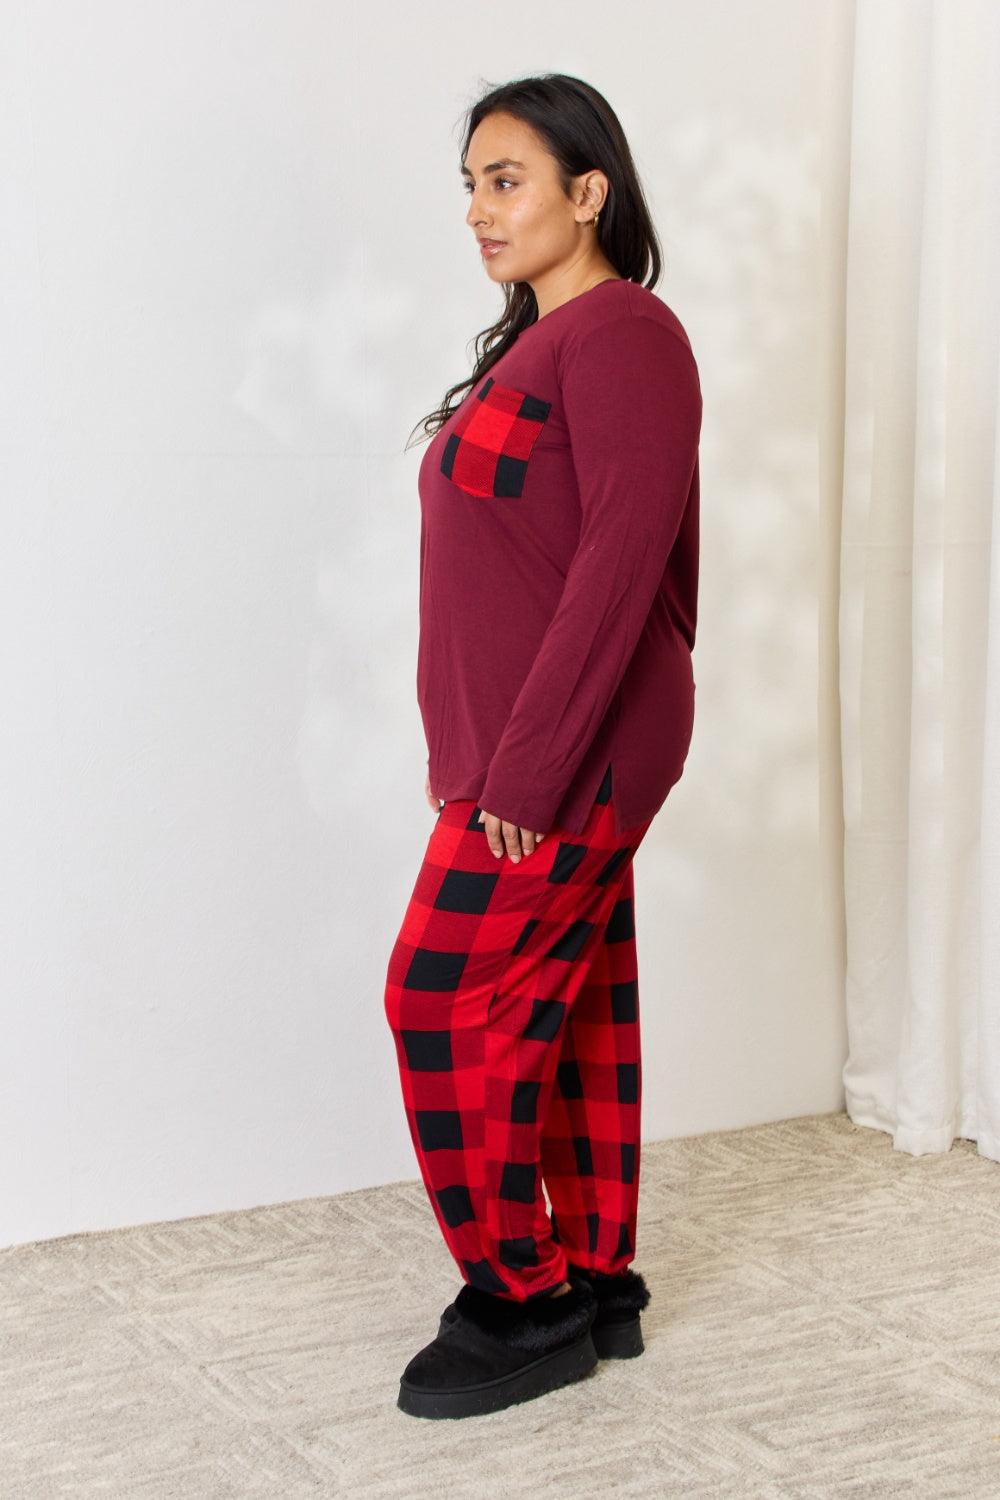 Bona Fide Fashion - Full Size Plaid Round Neck Top and Bottom Pajama Set - Women Fashion - Bona Fide Fashion